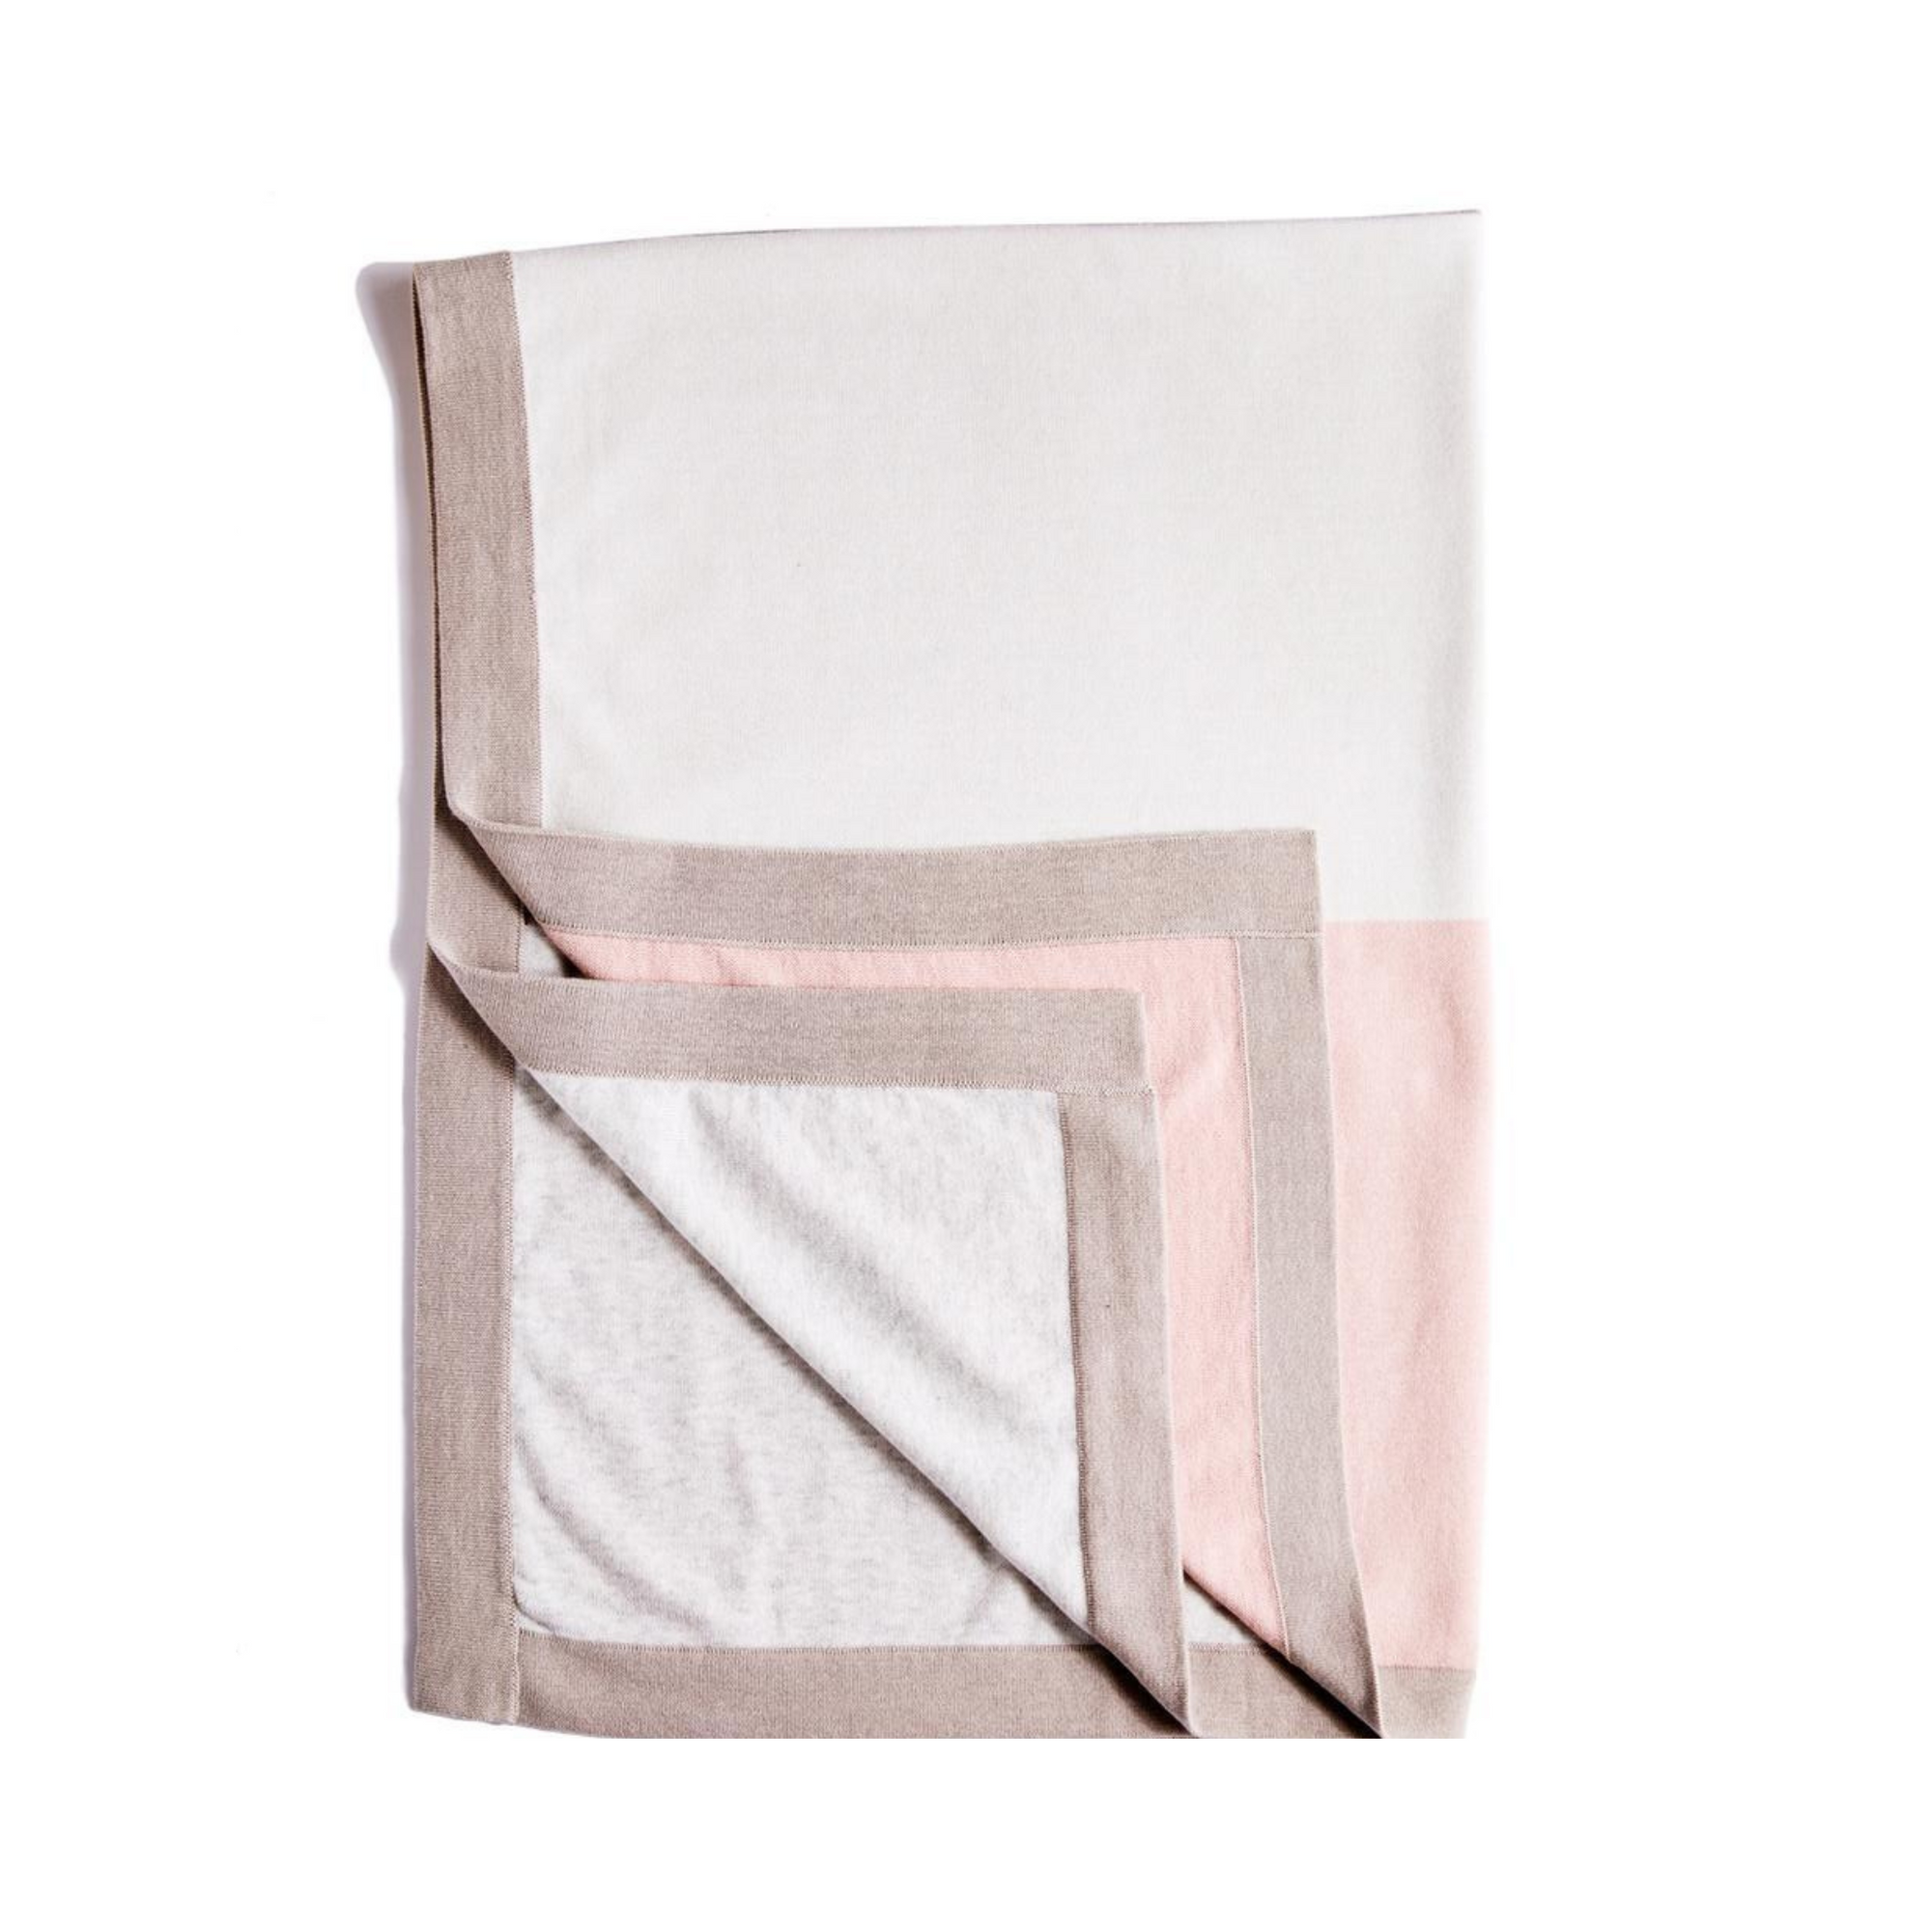 Beanstork Baby Wide Knit Blanket - Pink